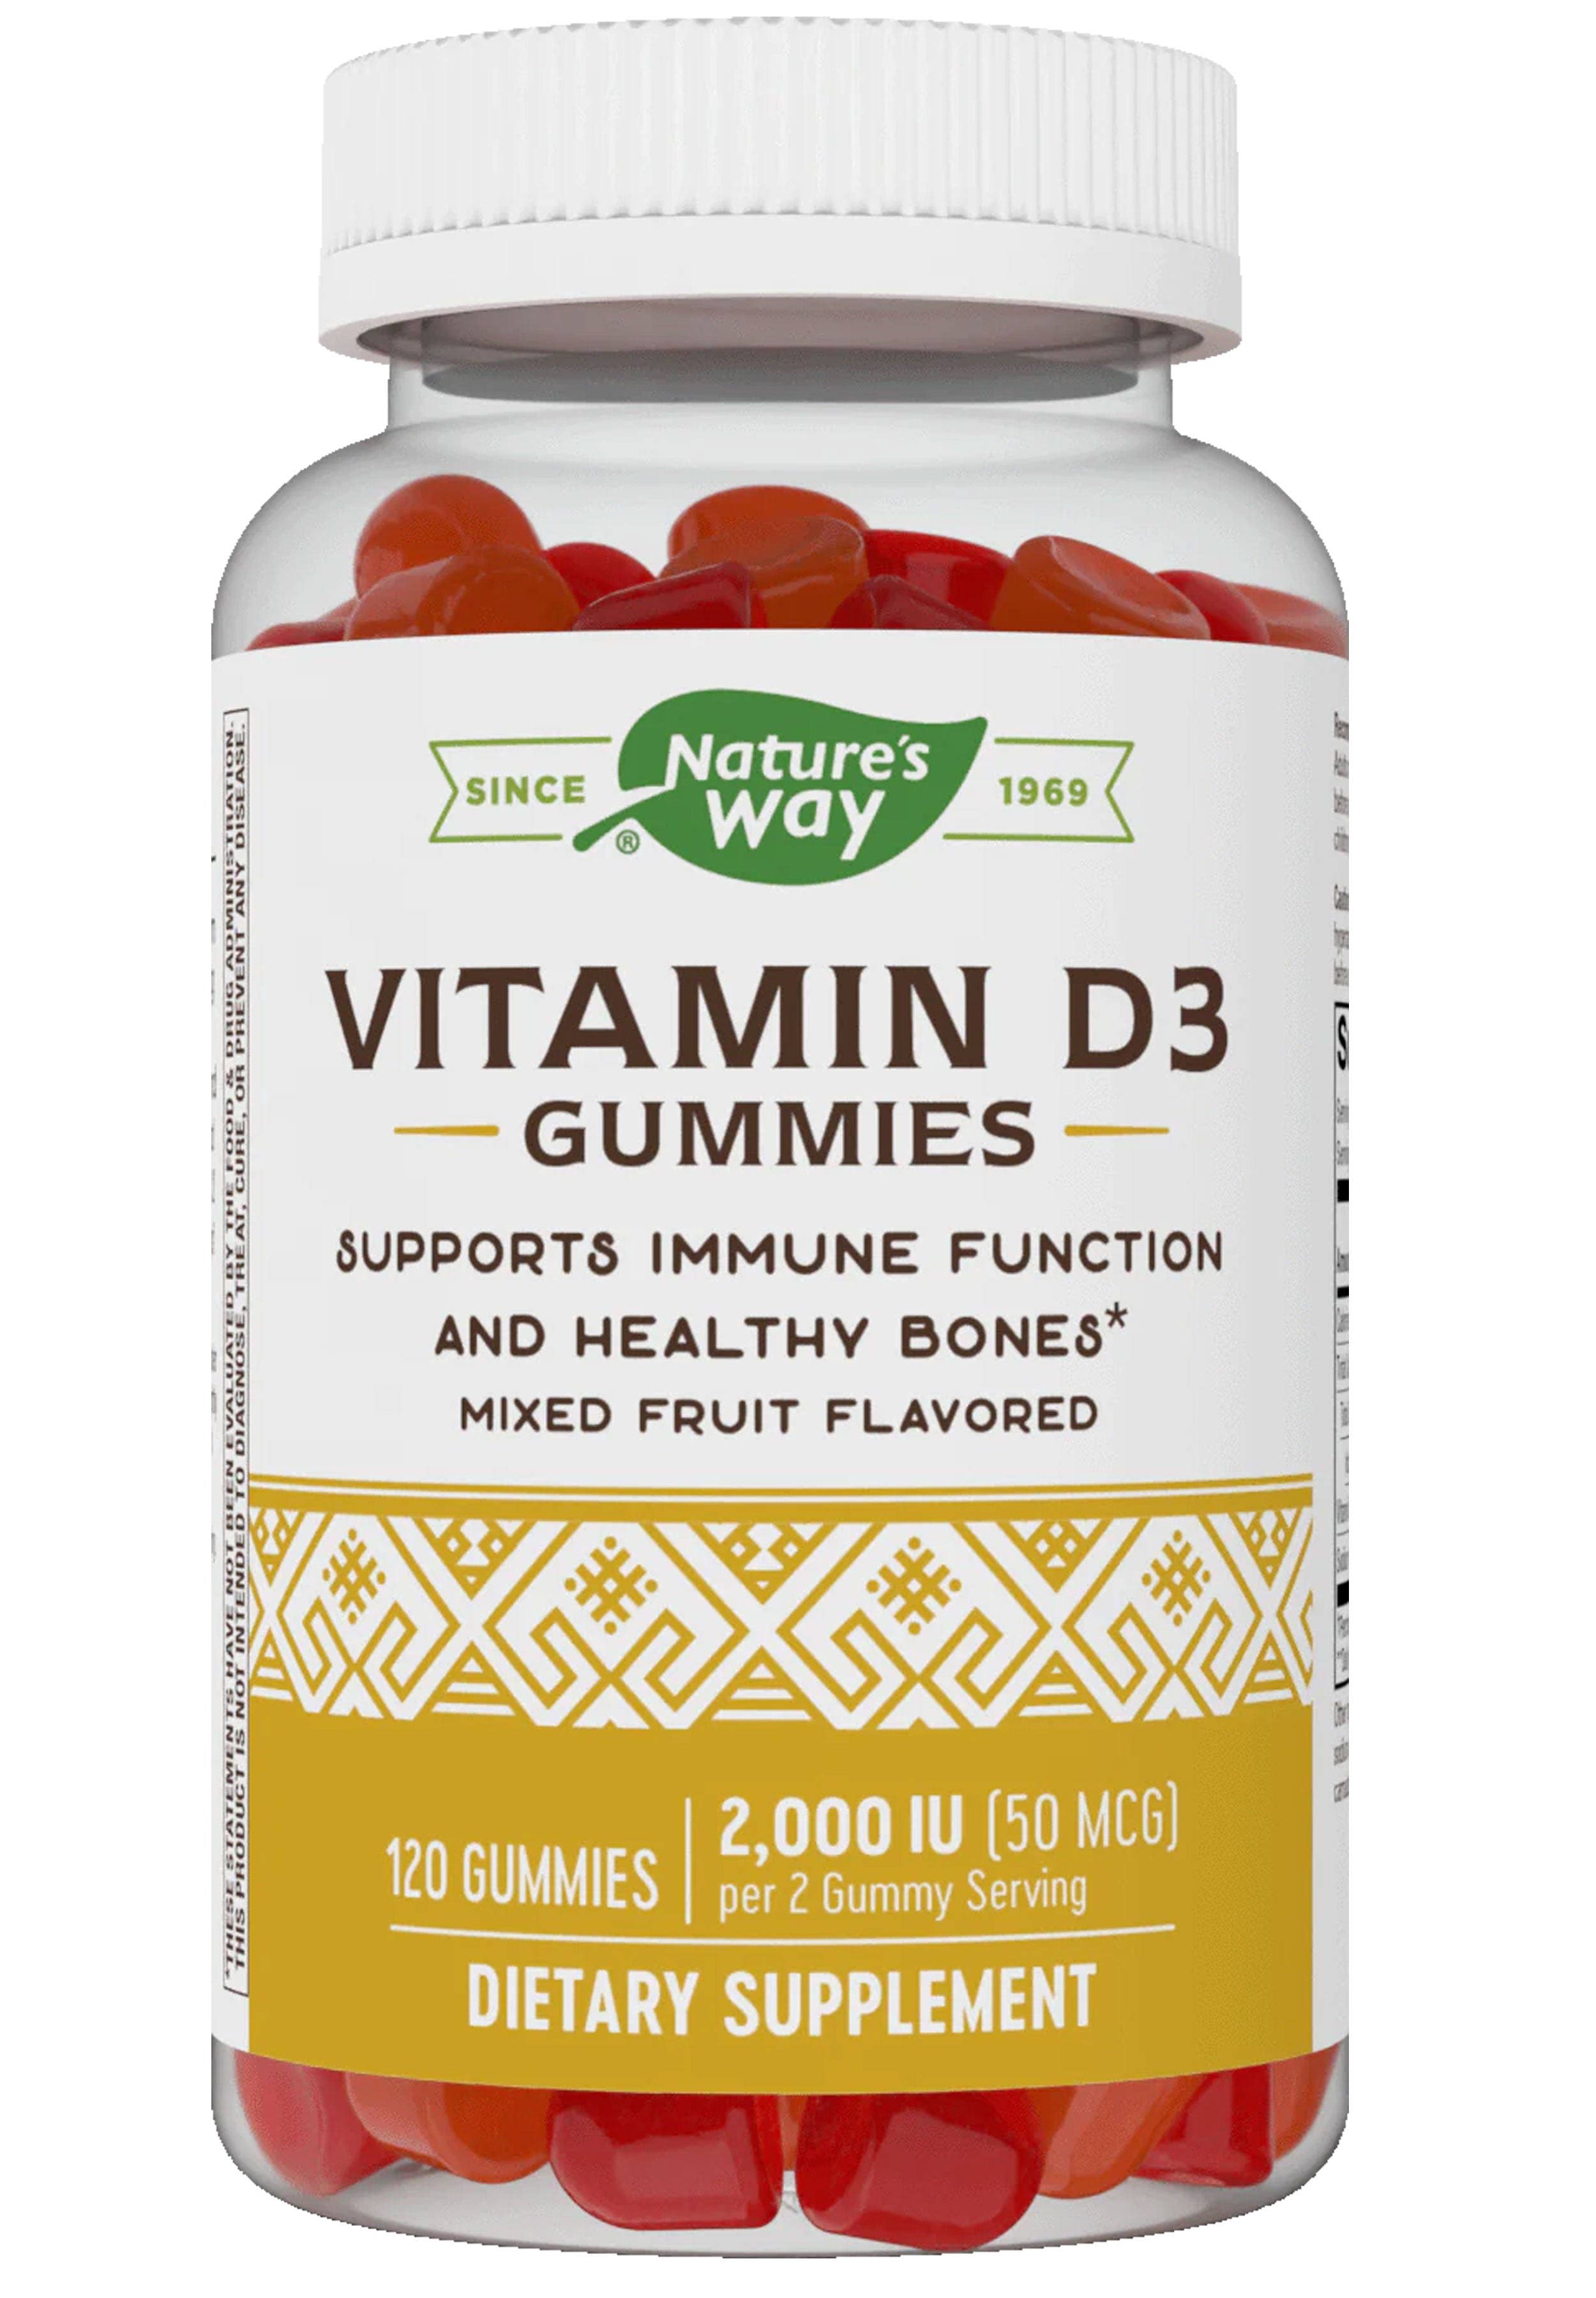 Nature's Way Vitamin D3, Mixed Fruit Flavored, 50 mcg, Gummies - 120 gummies